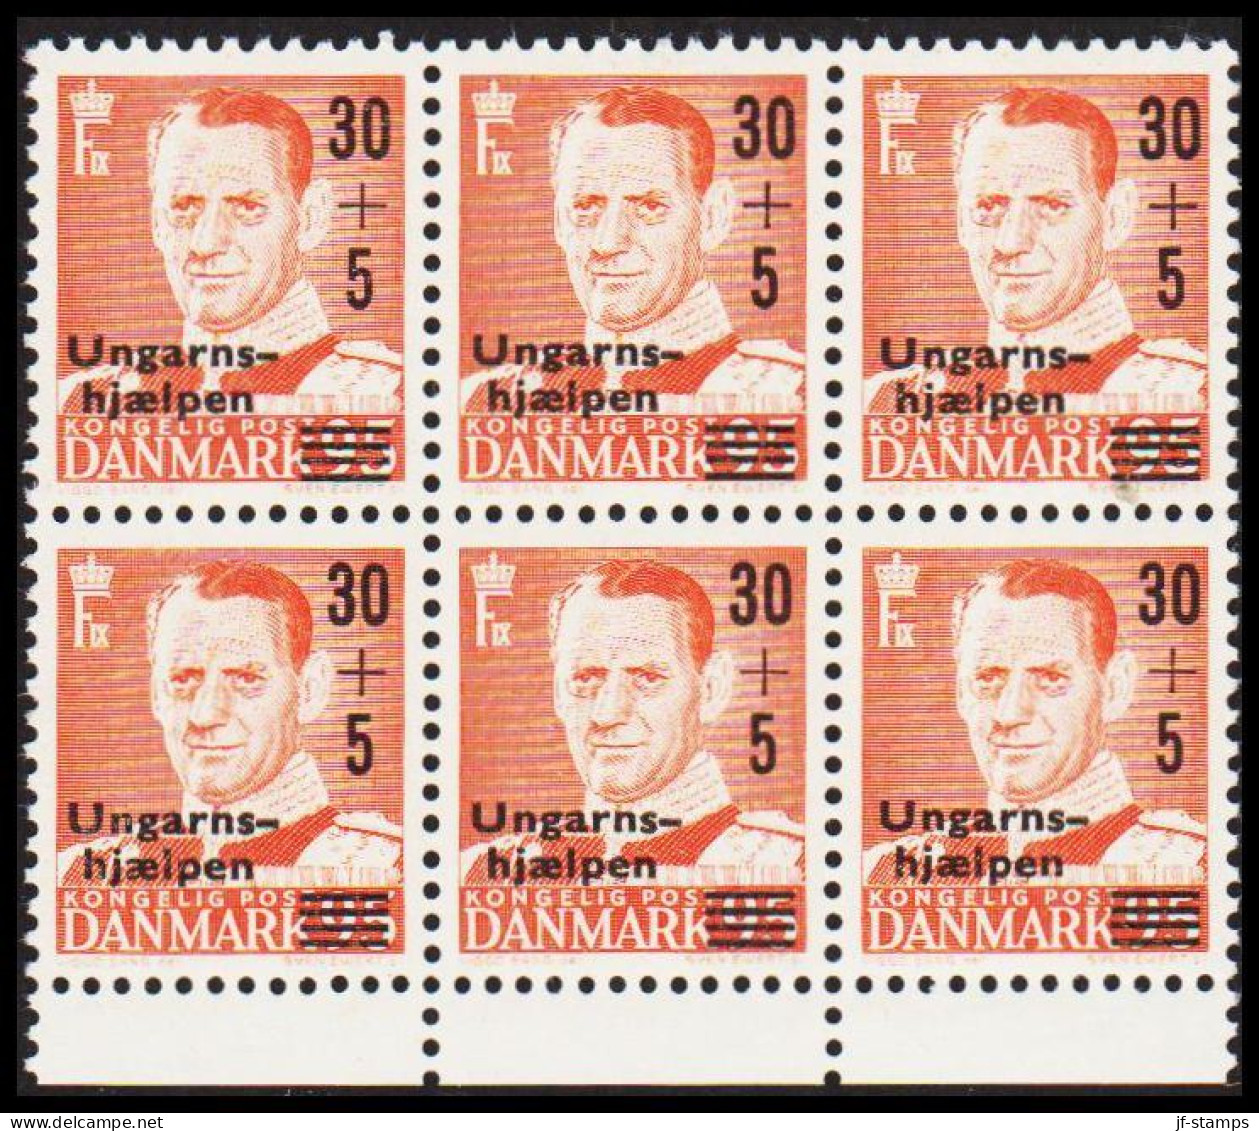 1957. DANMARK. 30+5 Ungarnshjælpen On 95 øre Frederik IX In Never Hinged 6-block. (Michel 366) - JF540693 - Briefe U. Dokumente